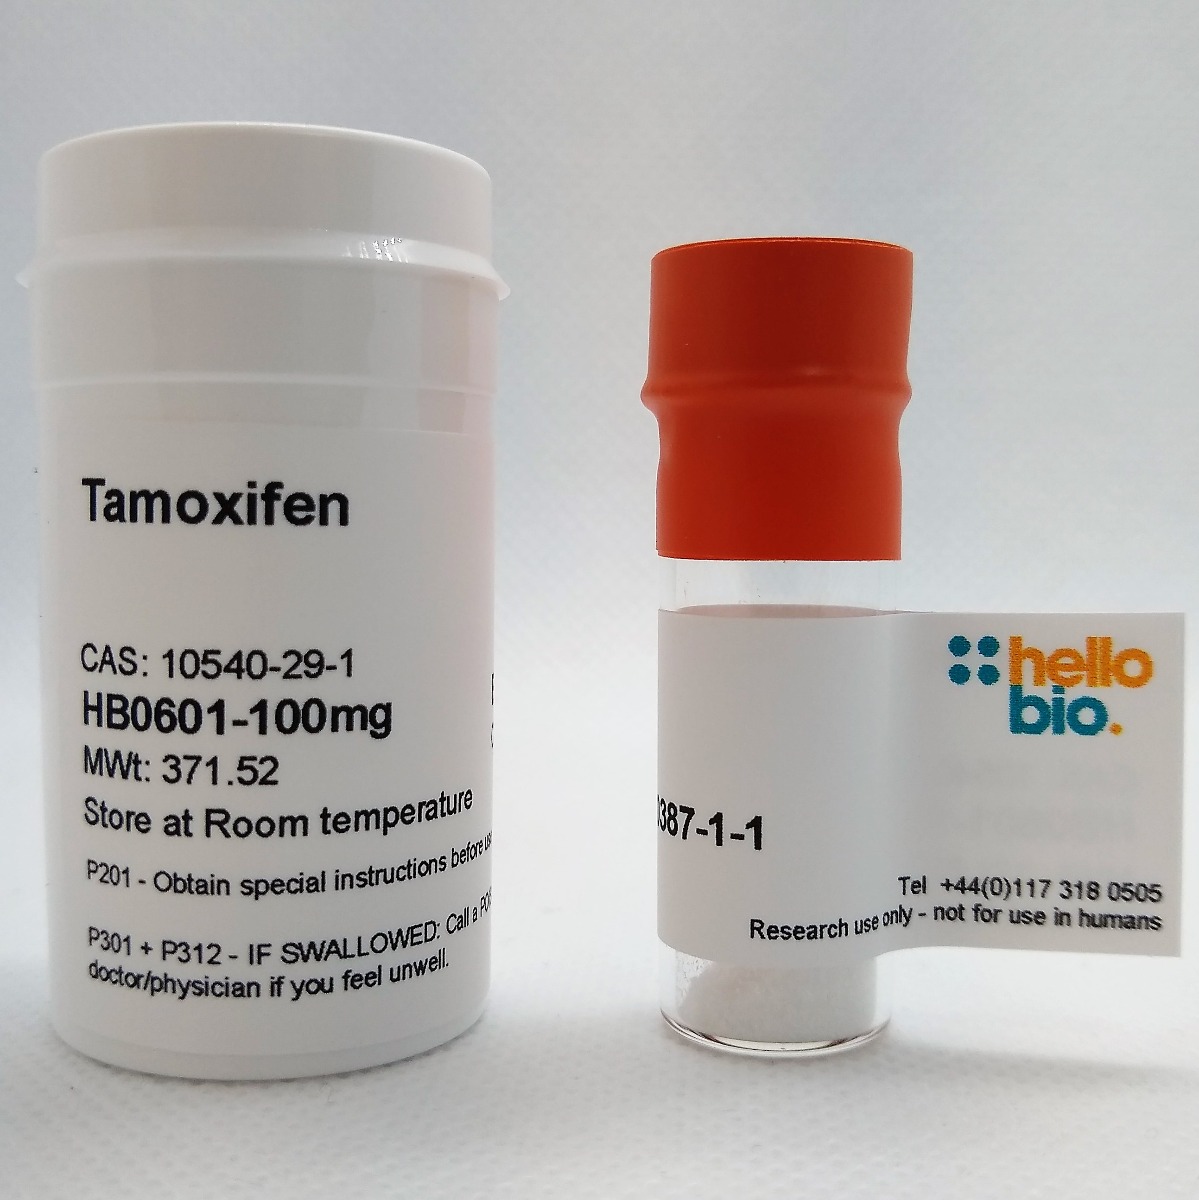 Tamoxifen product vial image | Hello Bio